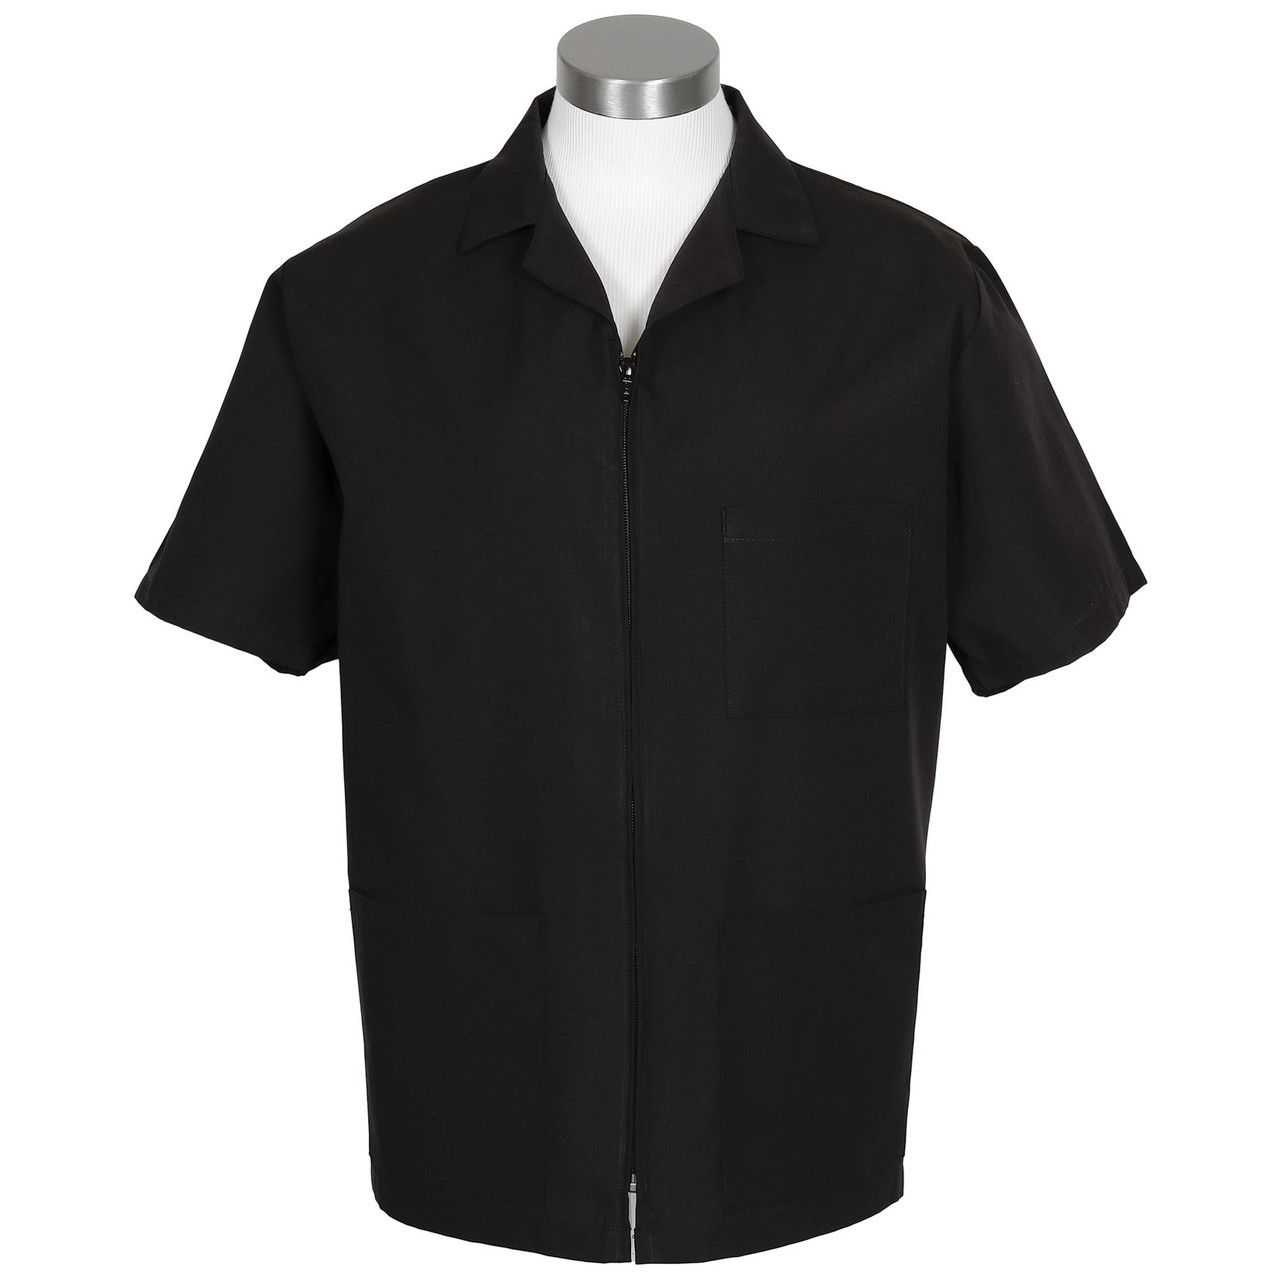 Is the short sleeve unisex zipper front smock black?